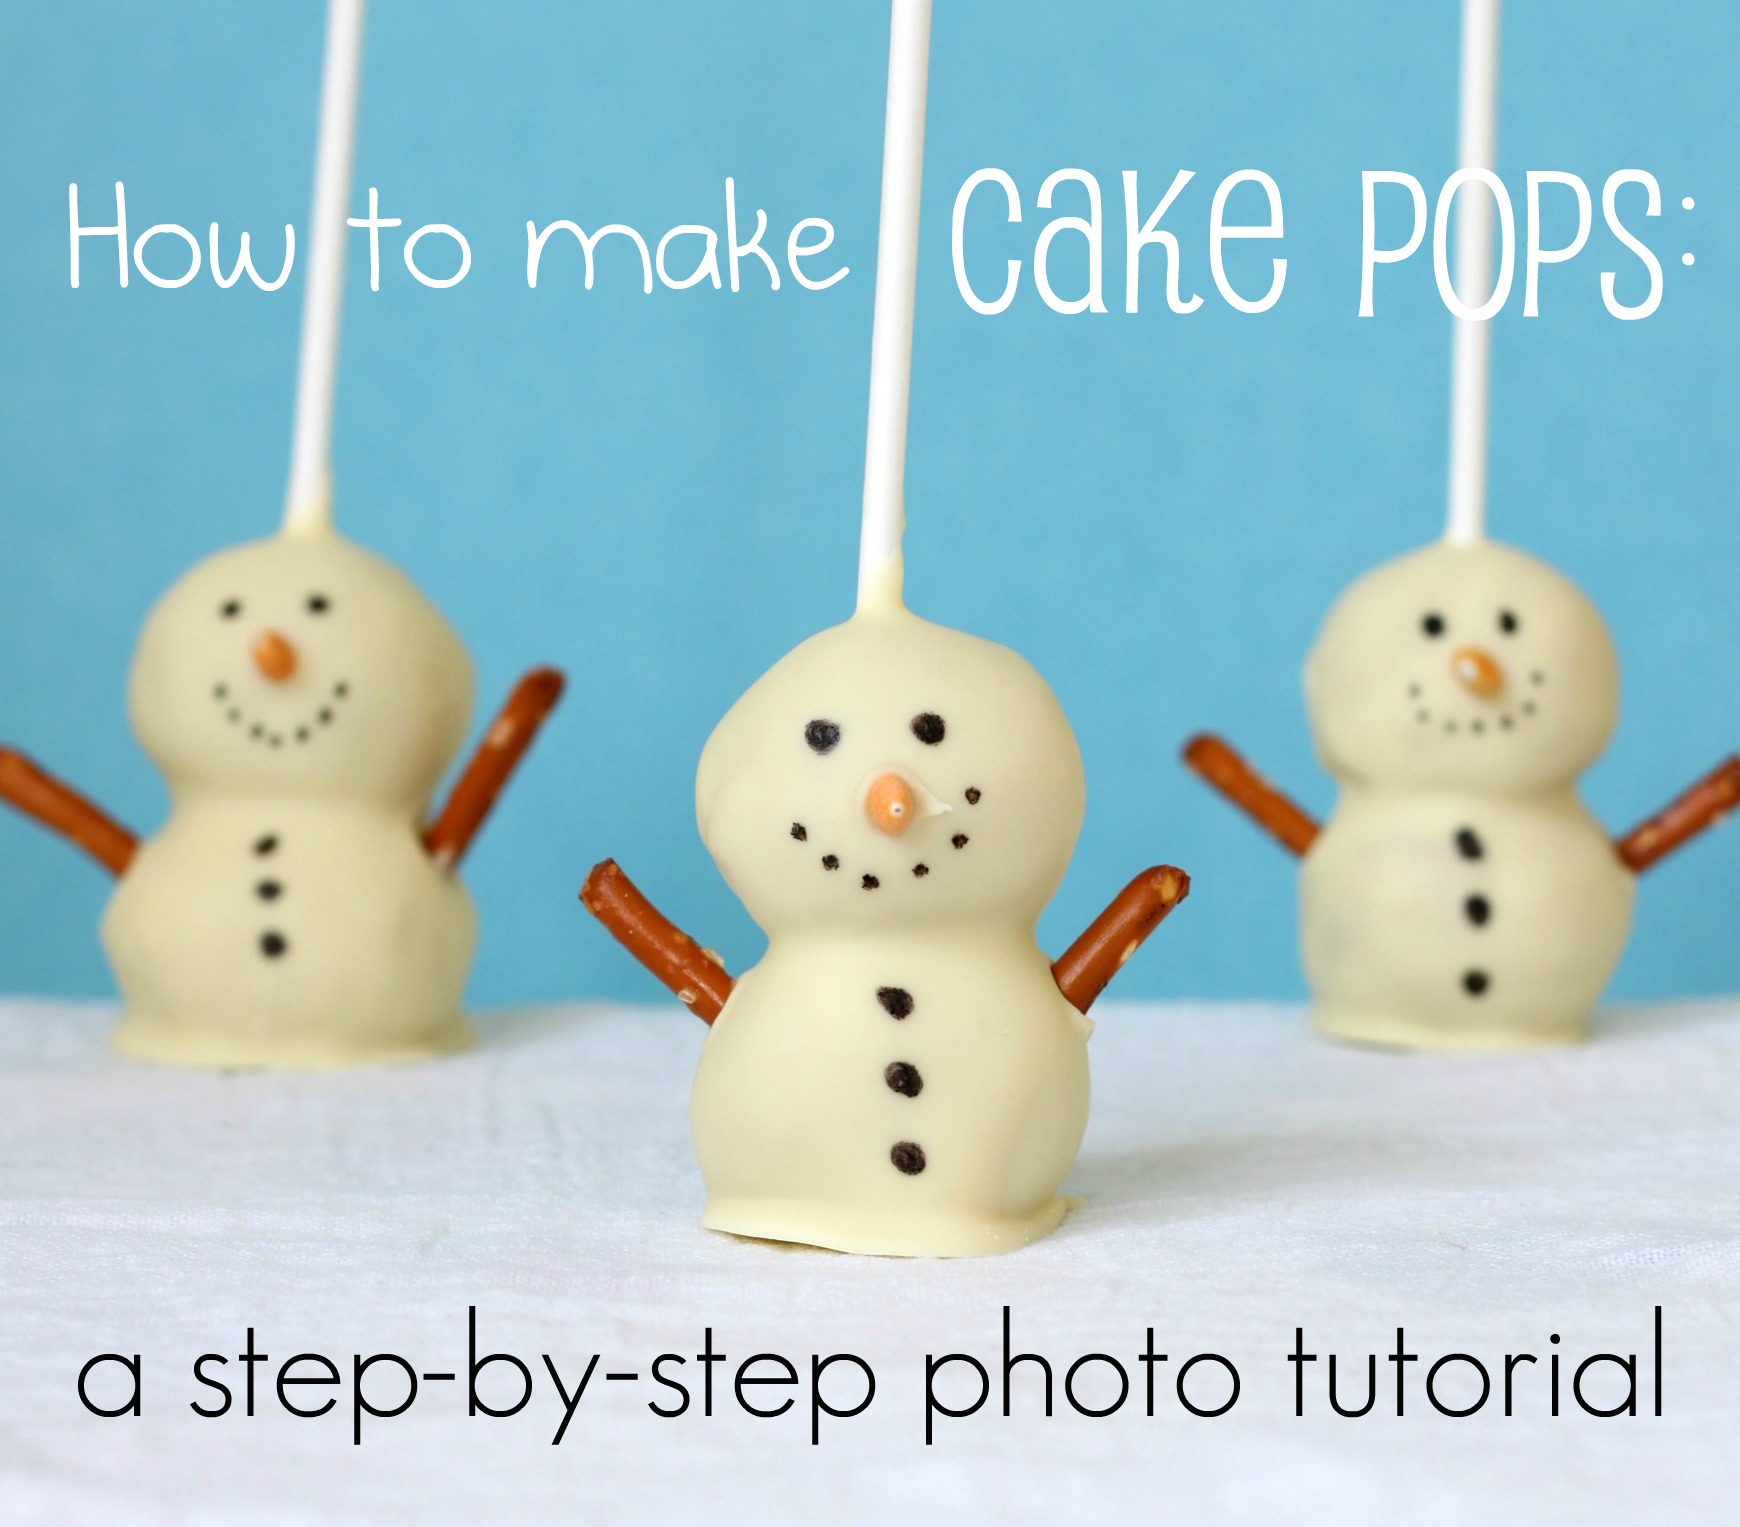 How to make cake pops